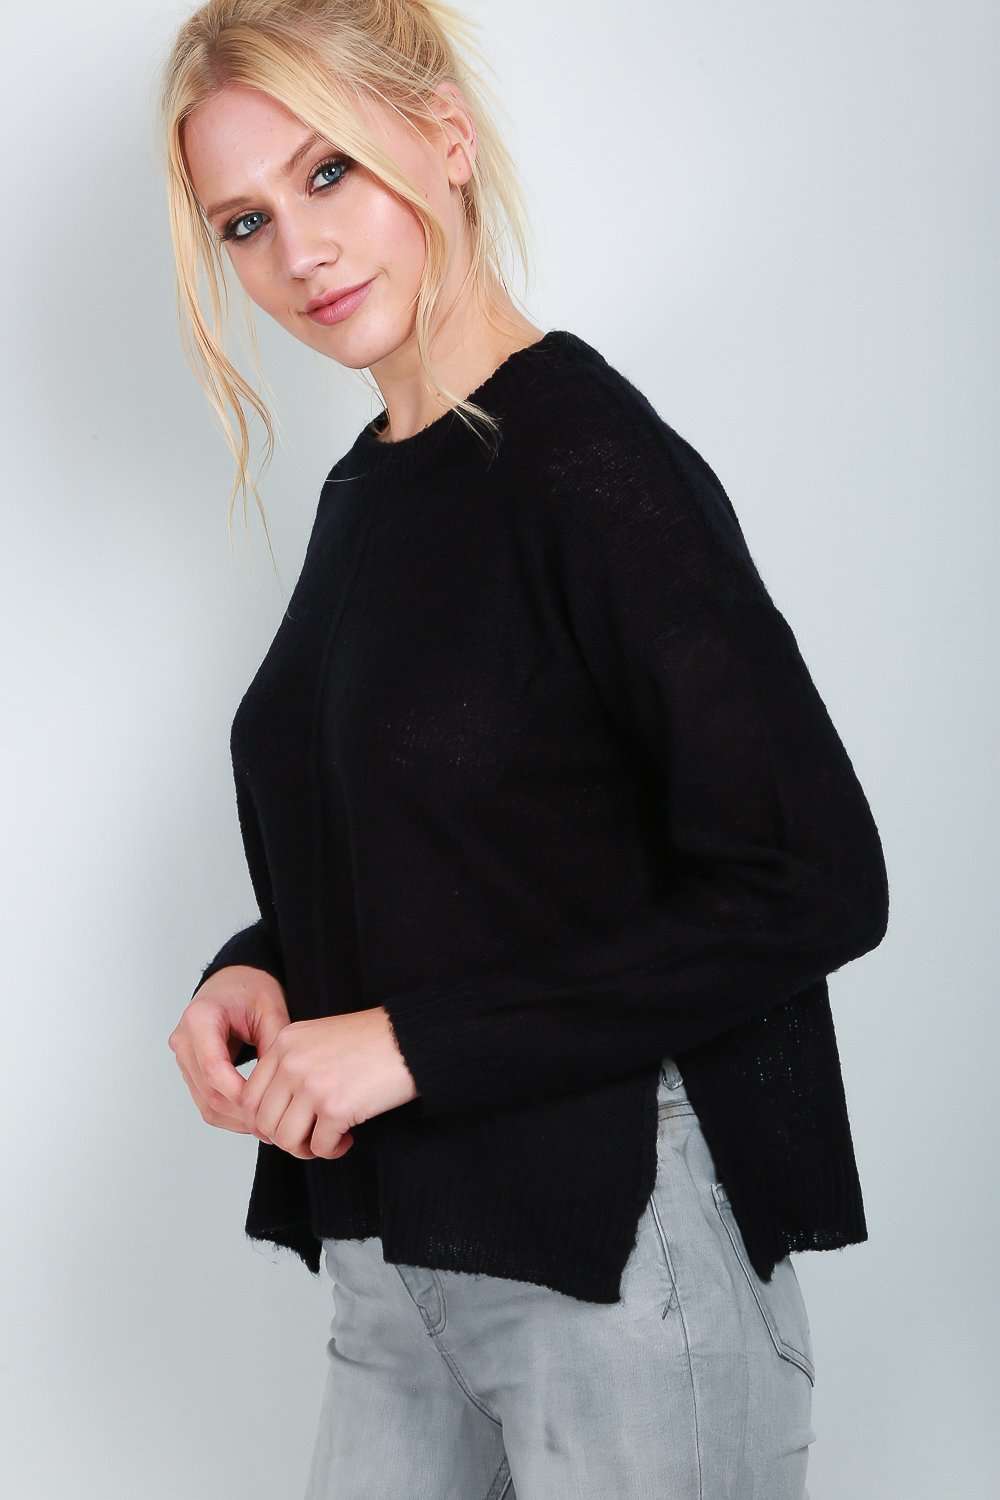 Maria Fine Knitted Jumper - bejealous-com